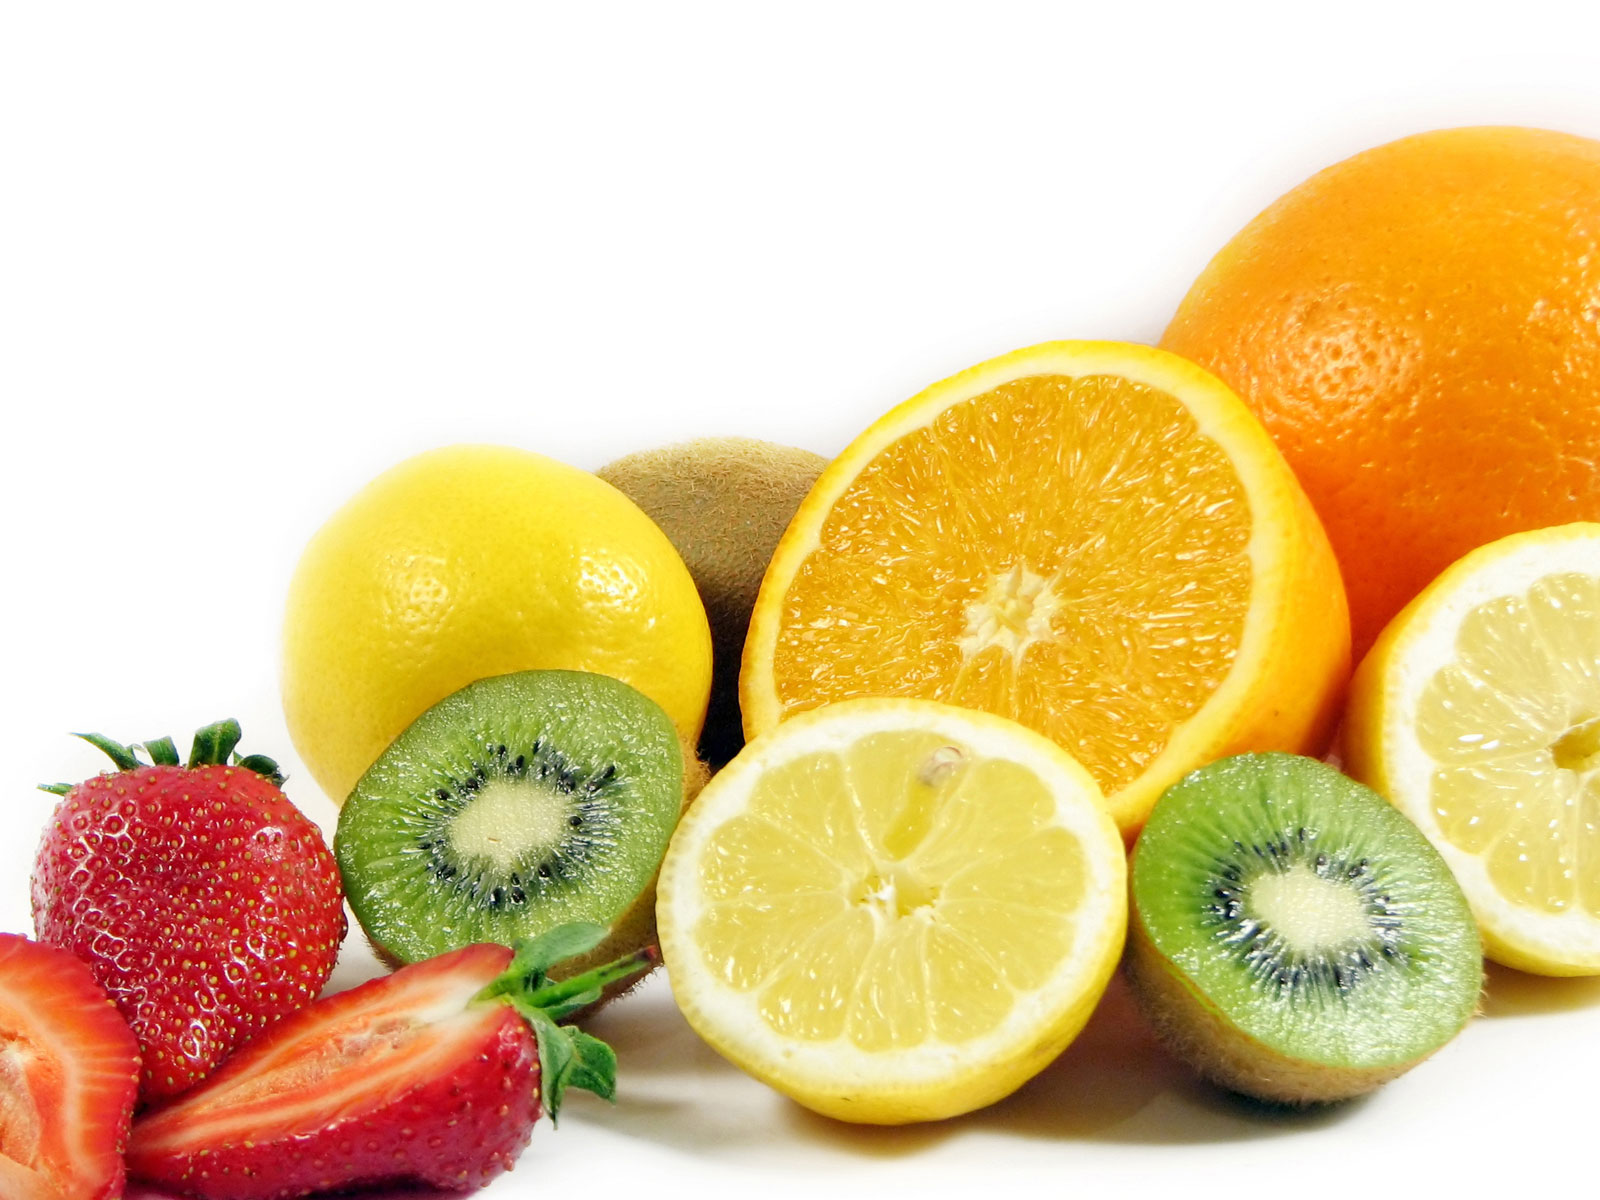 Fruits Wallpaper Desktop Mix Fresh